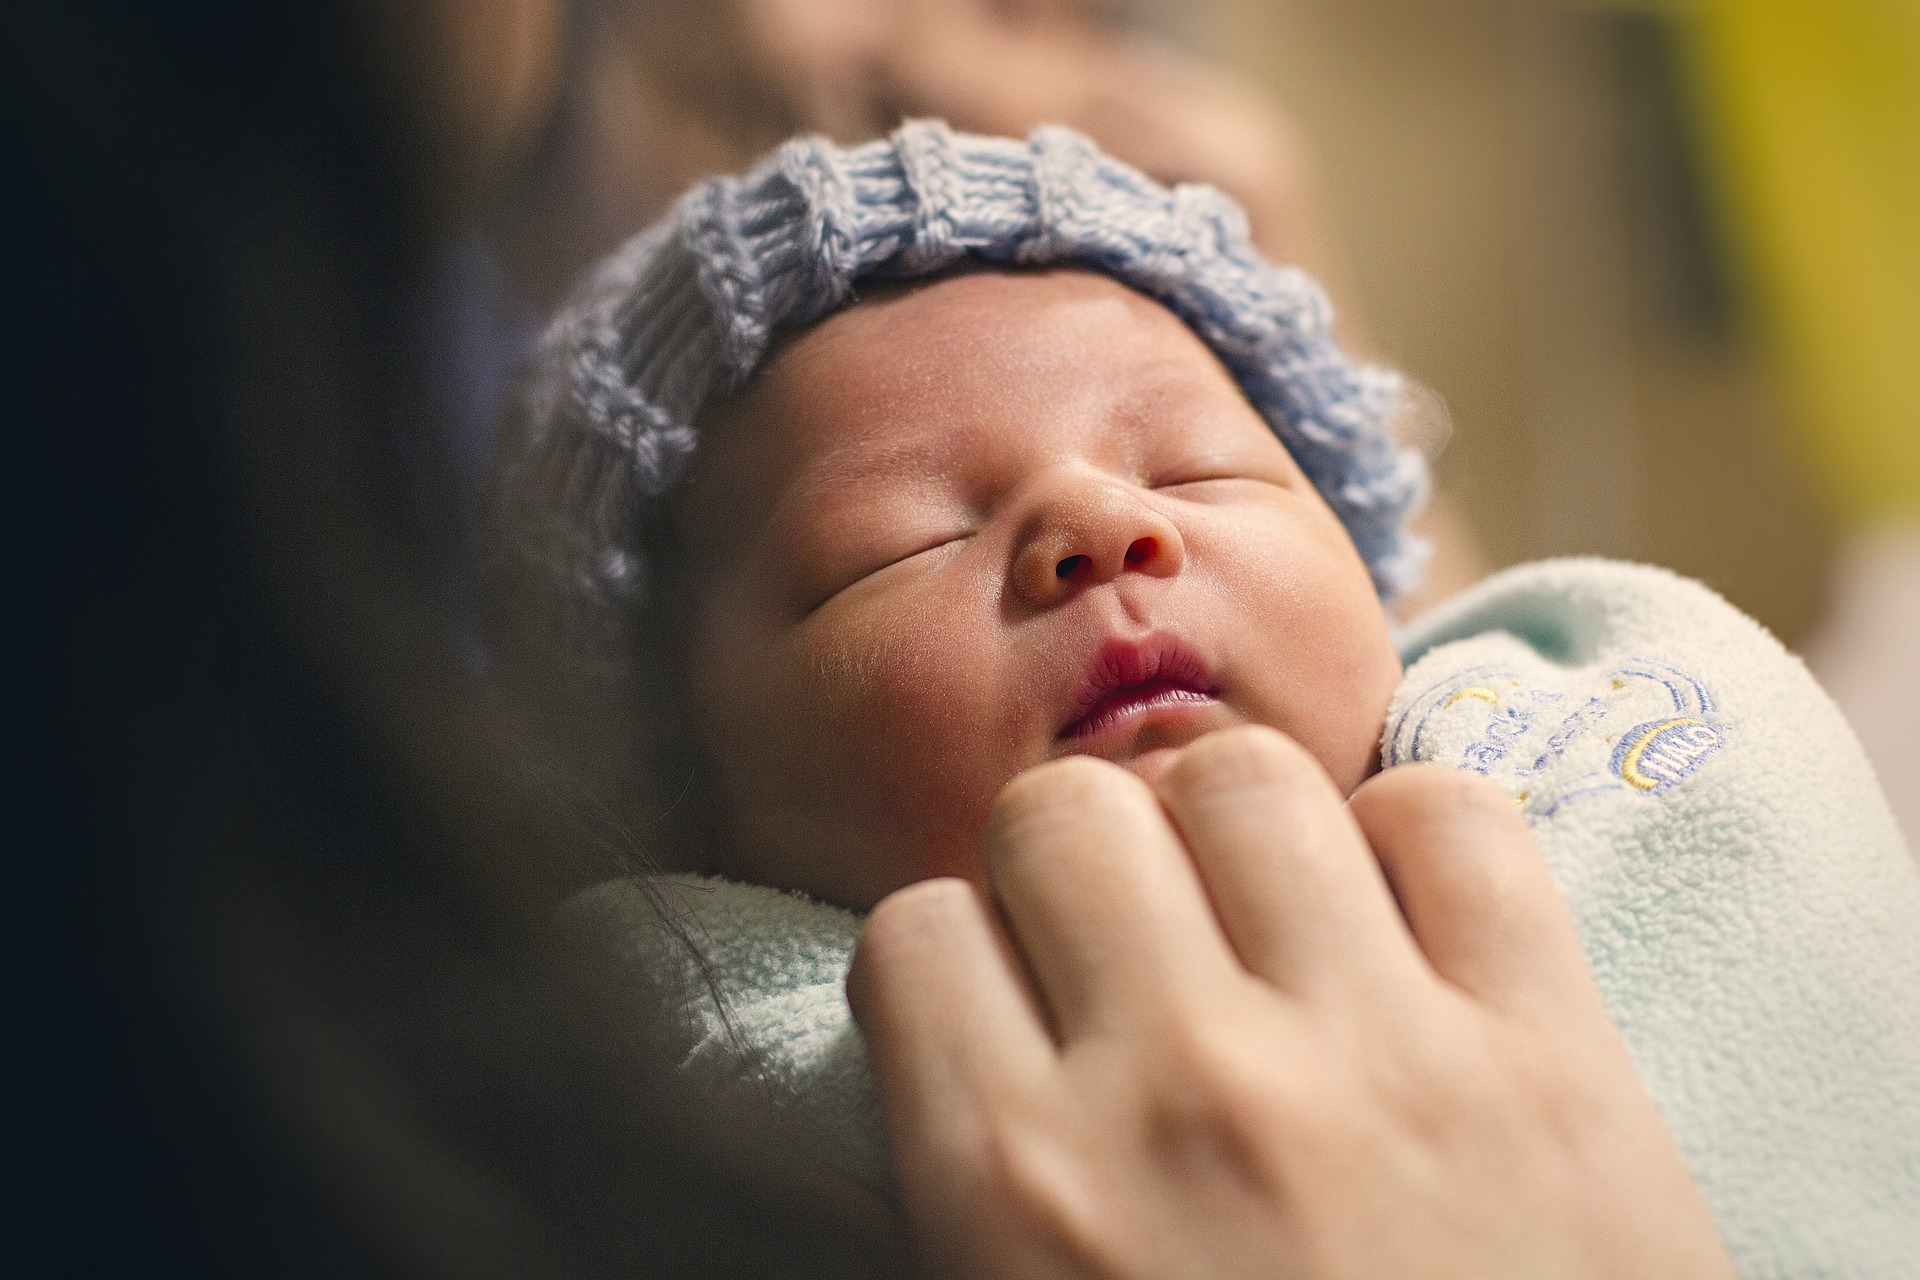 The golden rules when visiting a newborn